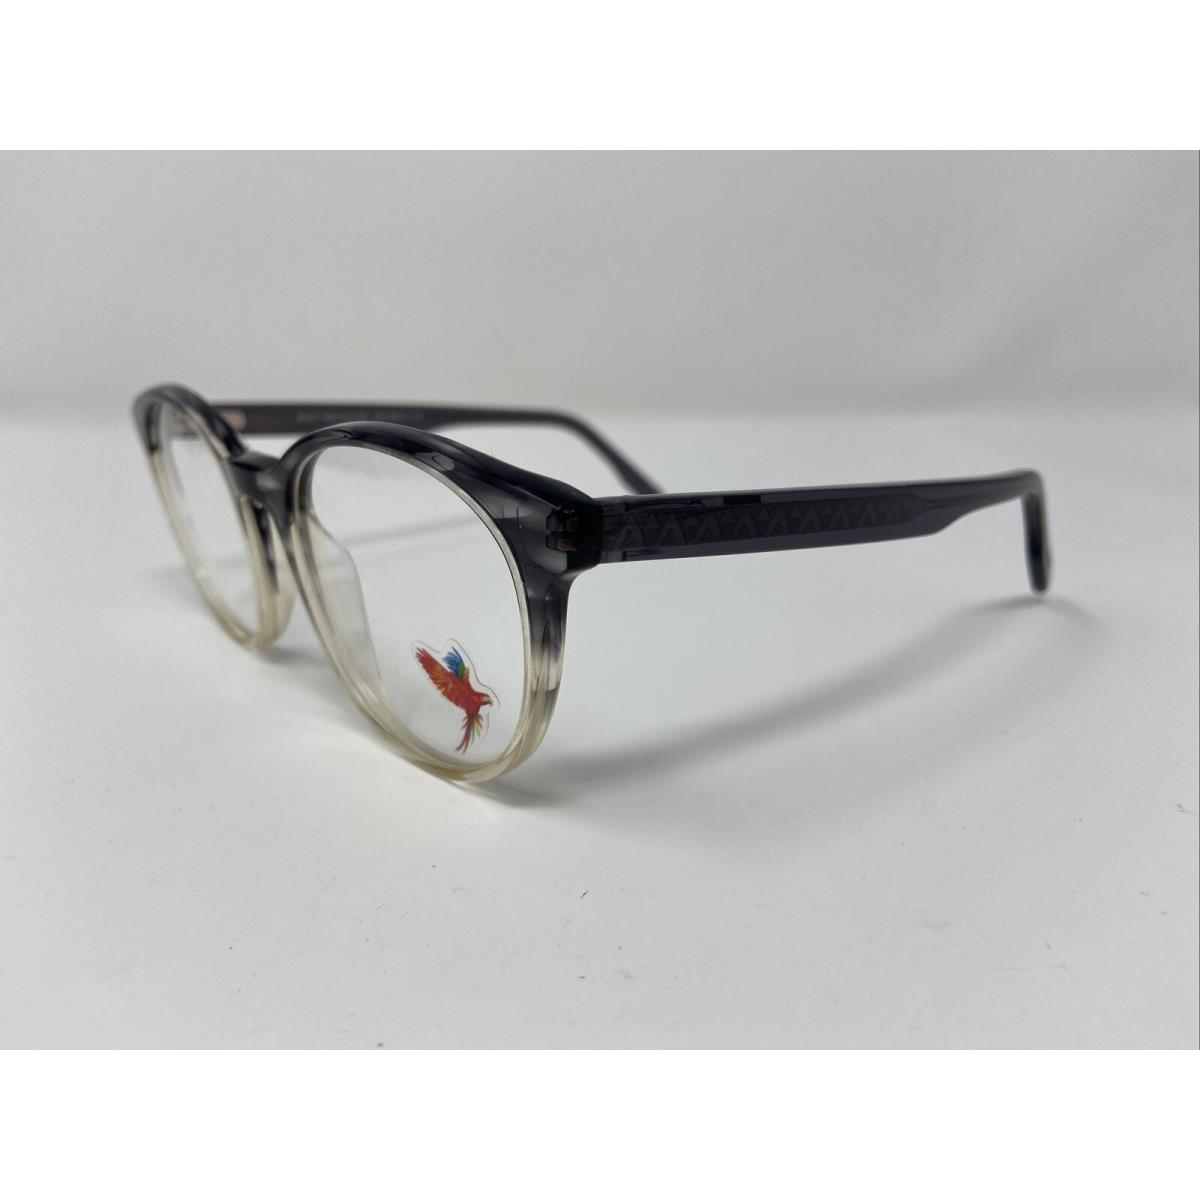 Maui Jim eyeglasses  - Gray Frame 0